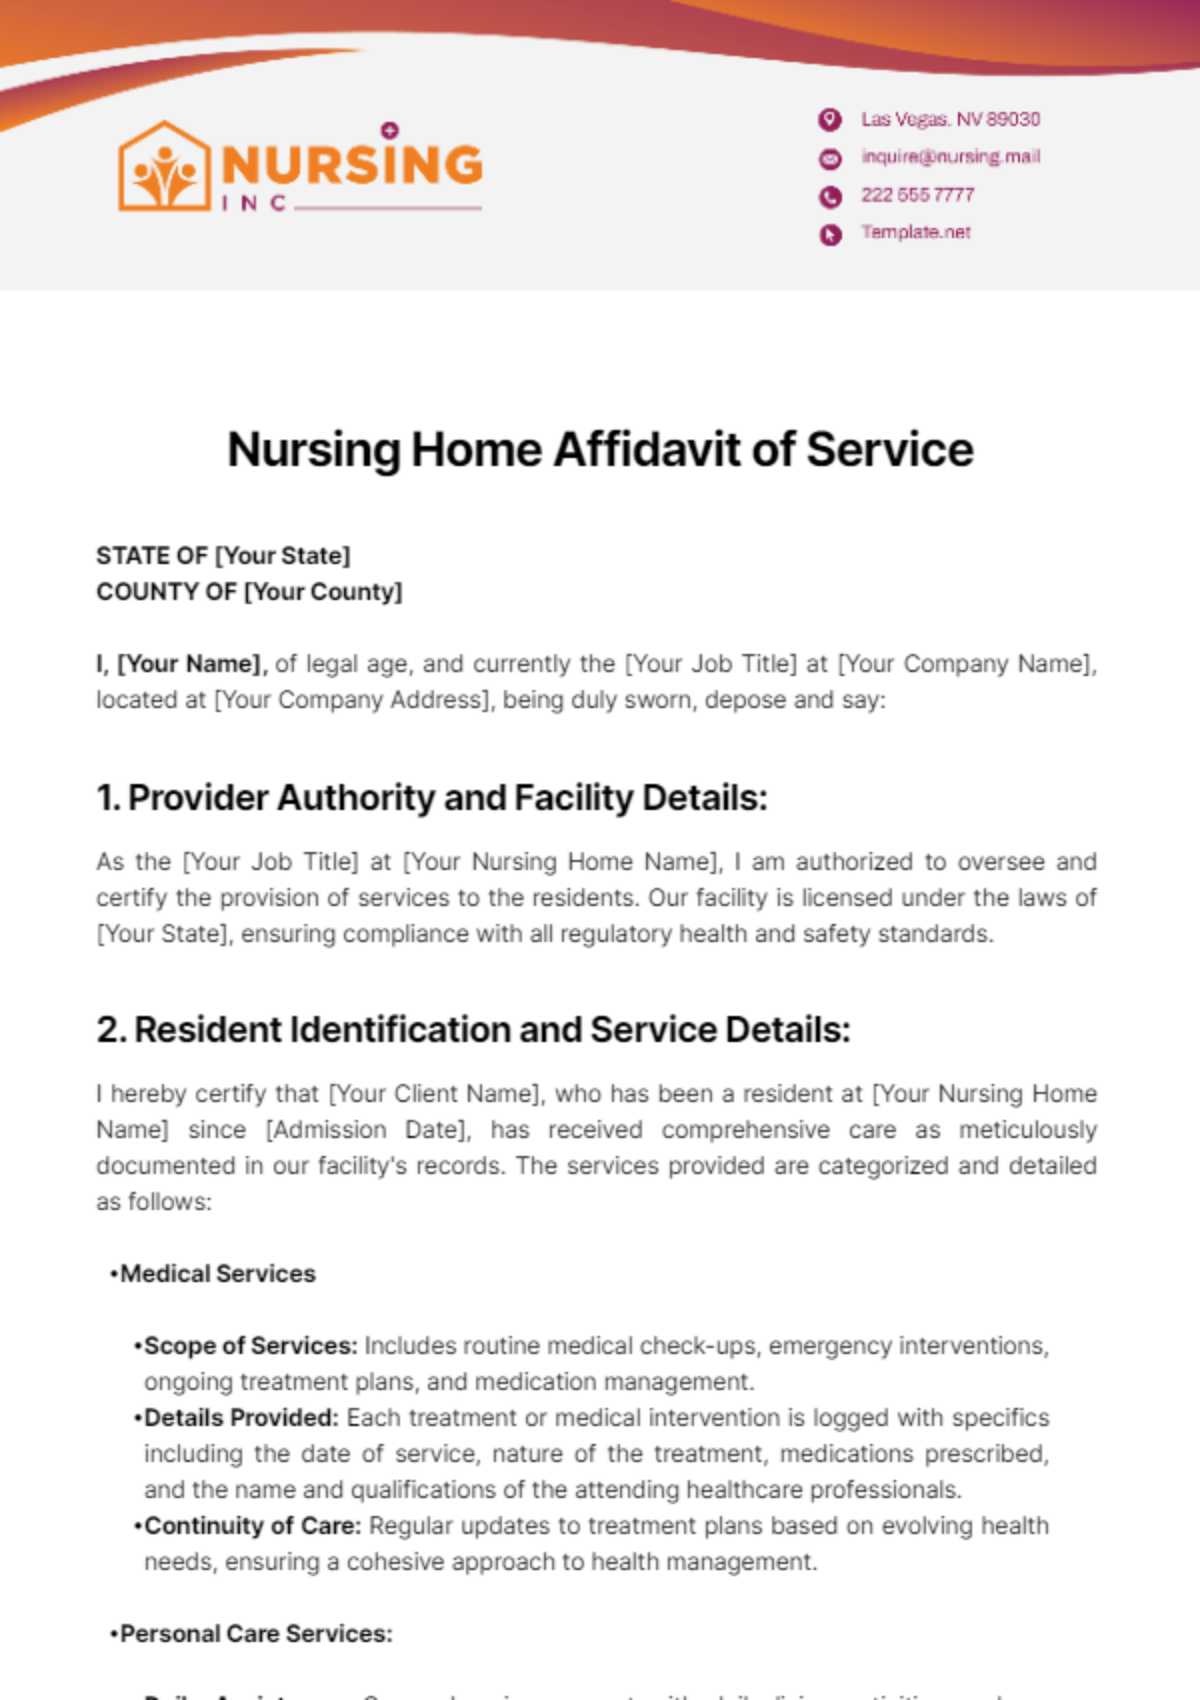 Nursing Home Affidavit of Service Template